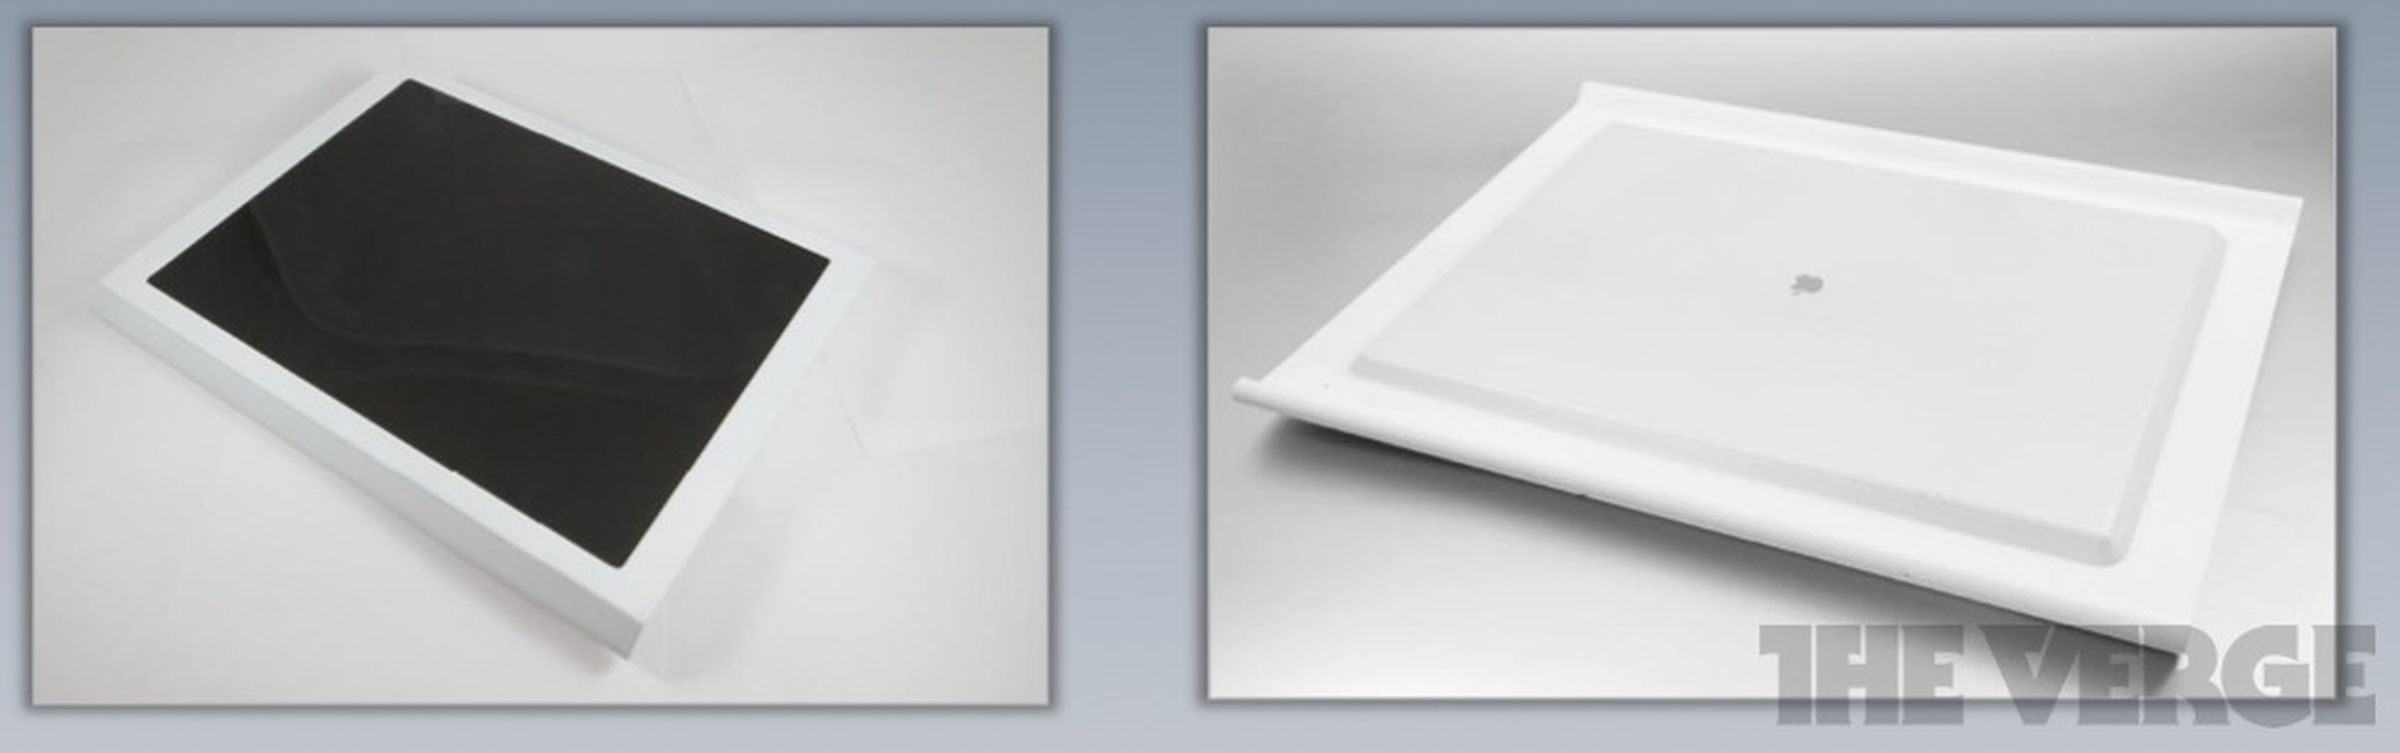 Apple iPad prototype images